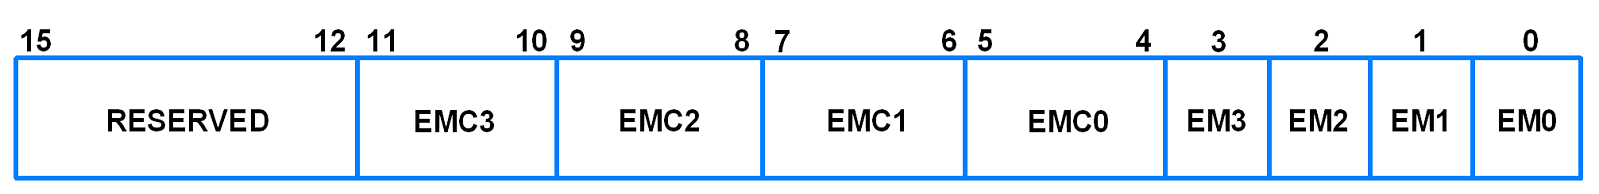 T0EMR (Timer0 External Match Register)